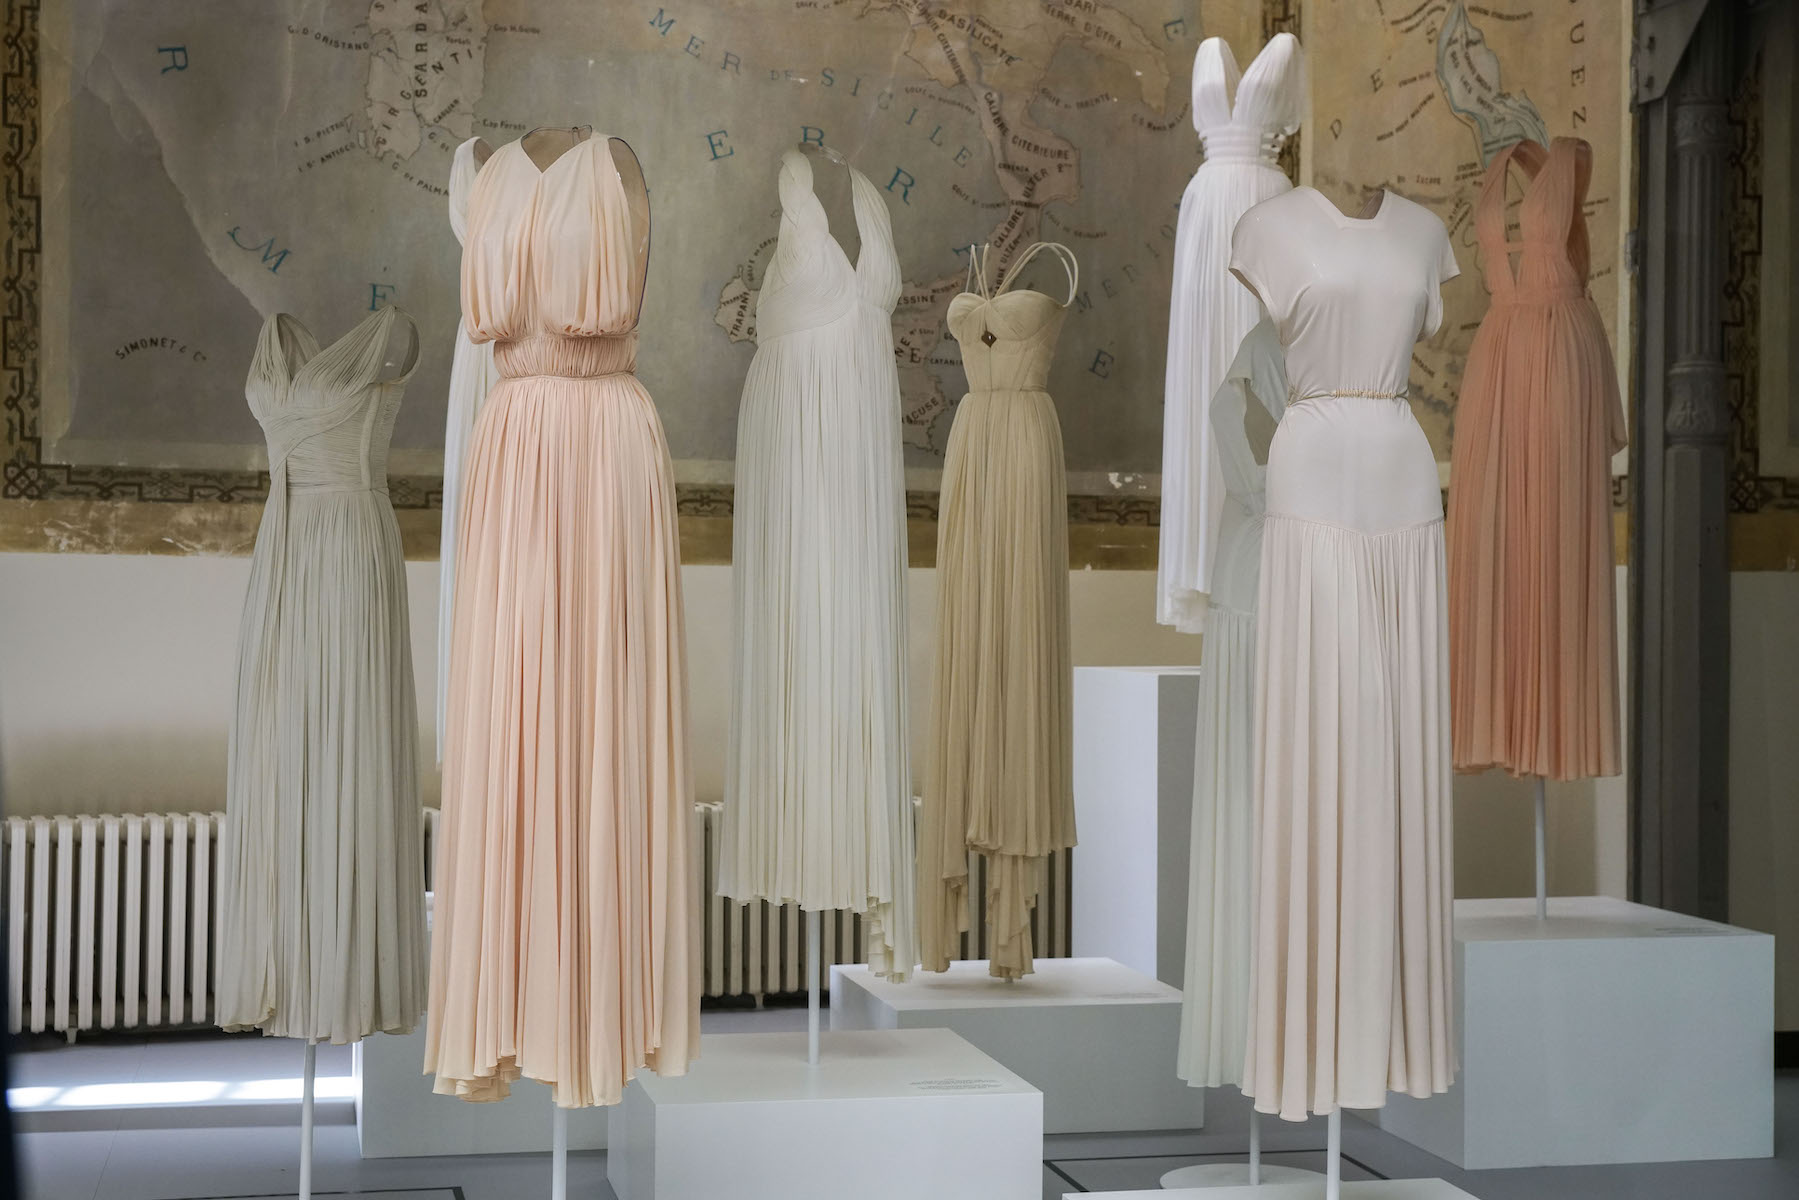 Azzedine Alaïa and Madame Grès exhibition explores fashion greats